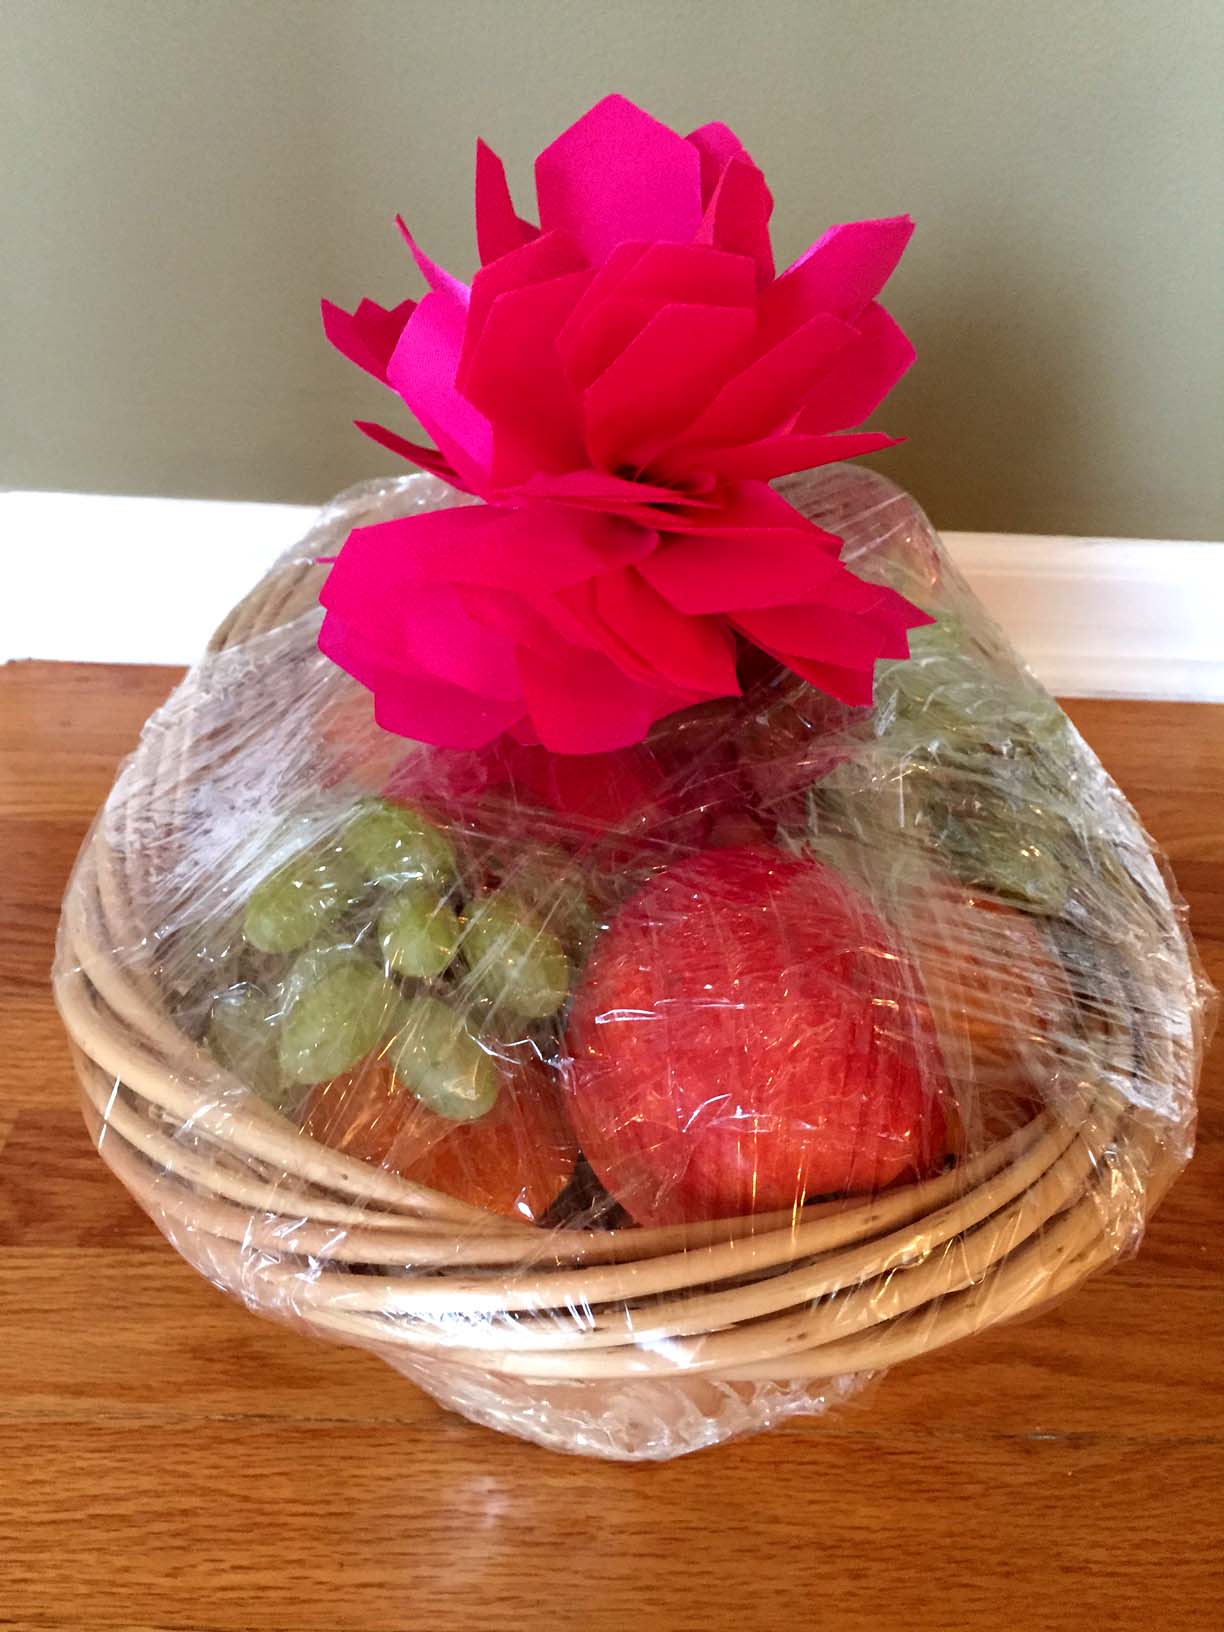 31 Fruit Basket Ideas That Will Blow Them Away - Dodo Burd | Fruit basket  diy gift, Fruit basket gift, Fruit baskets diy